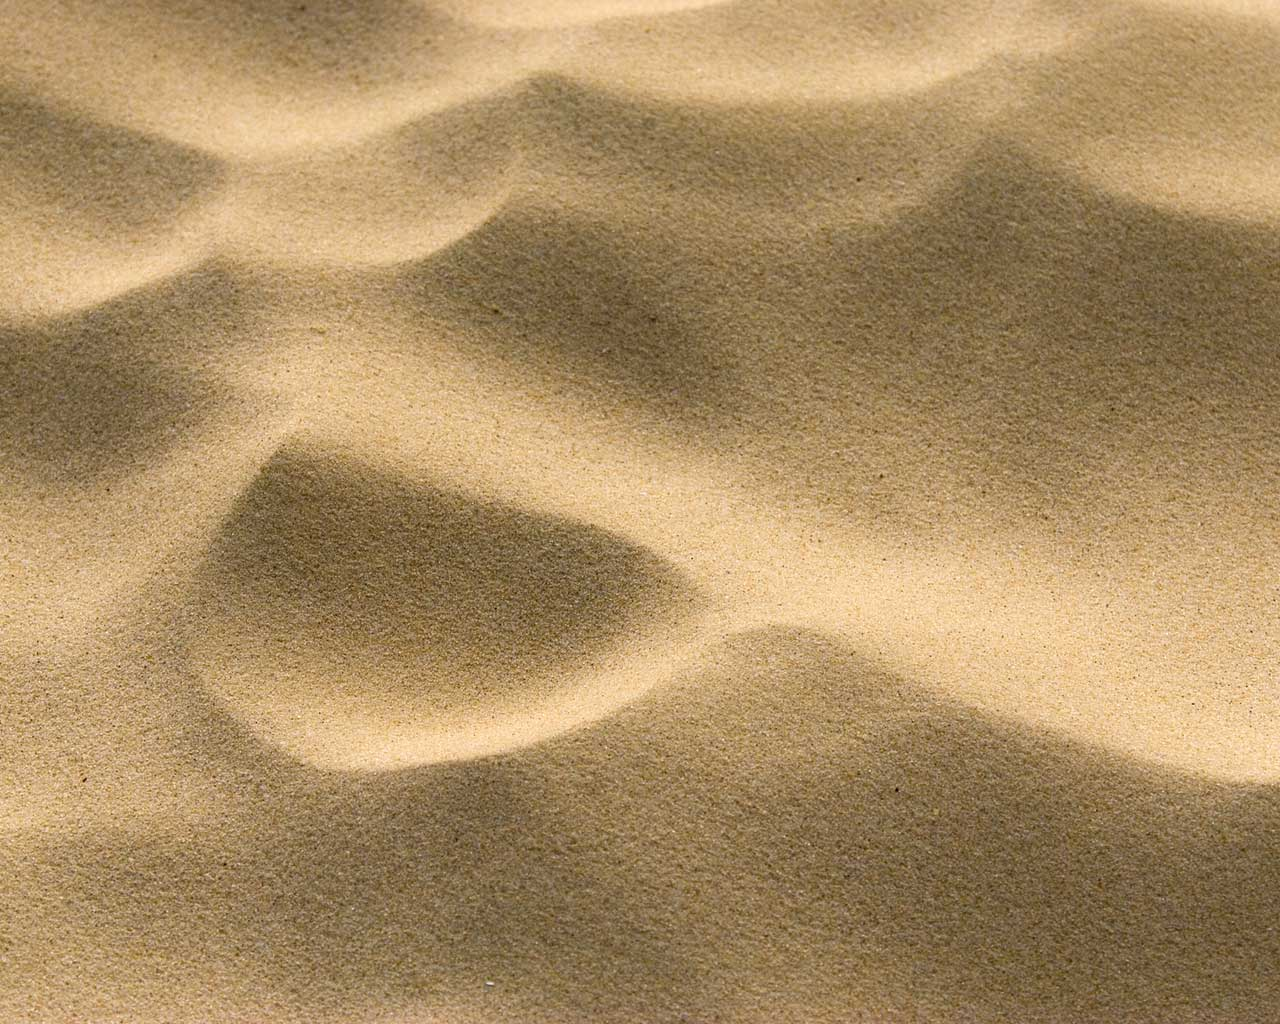 Sand Dunes Soft Free Images At Clker Com Vector Clip Art Online